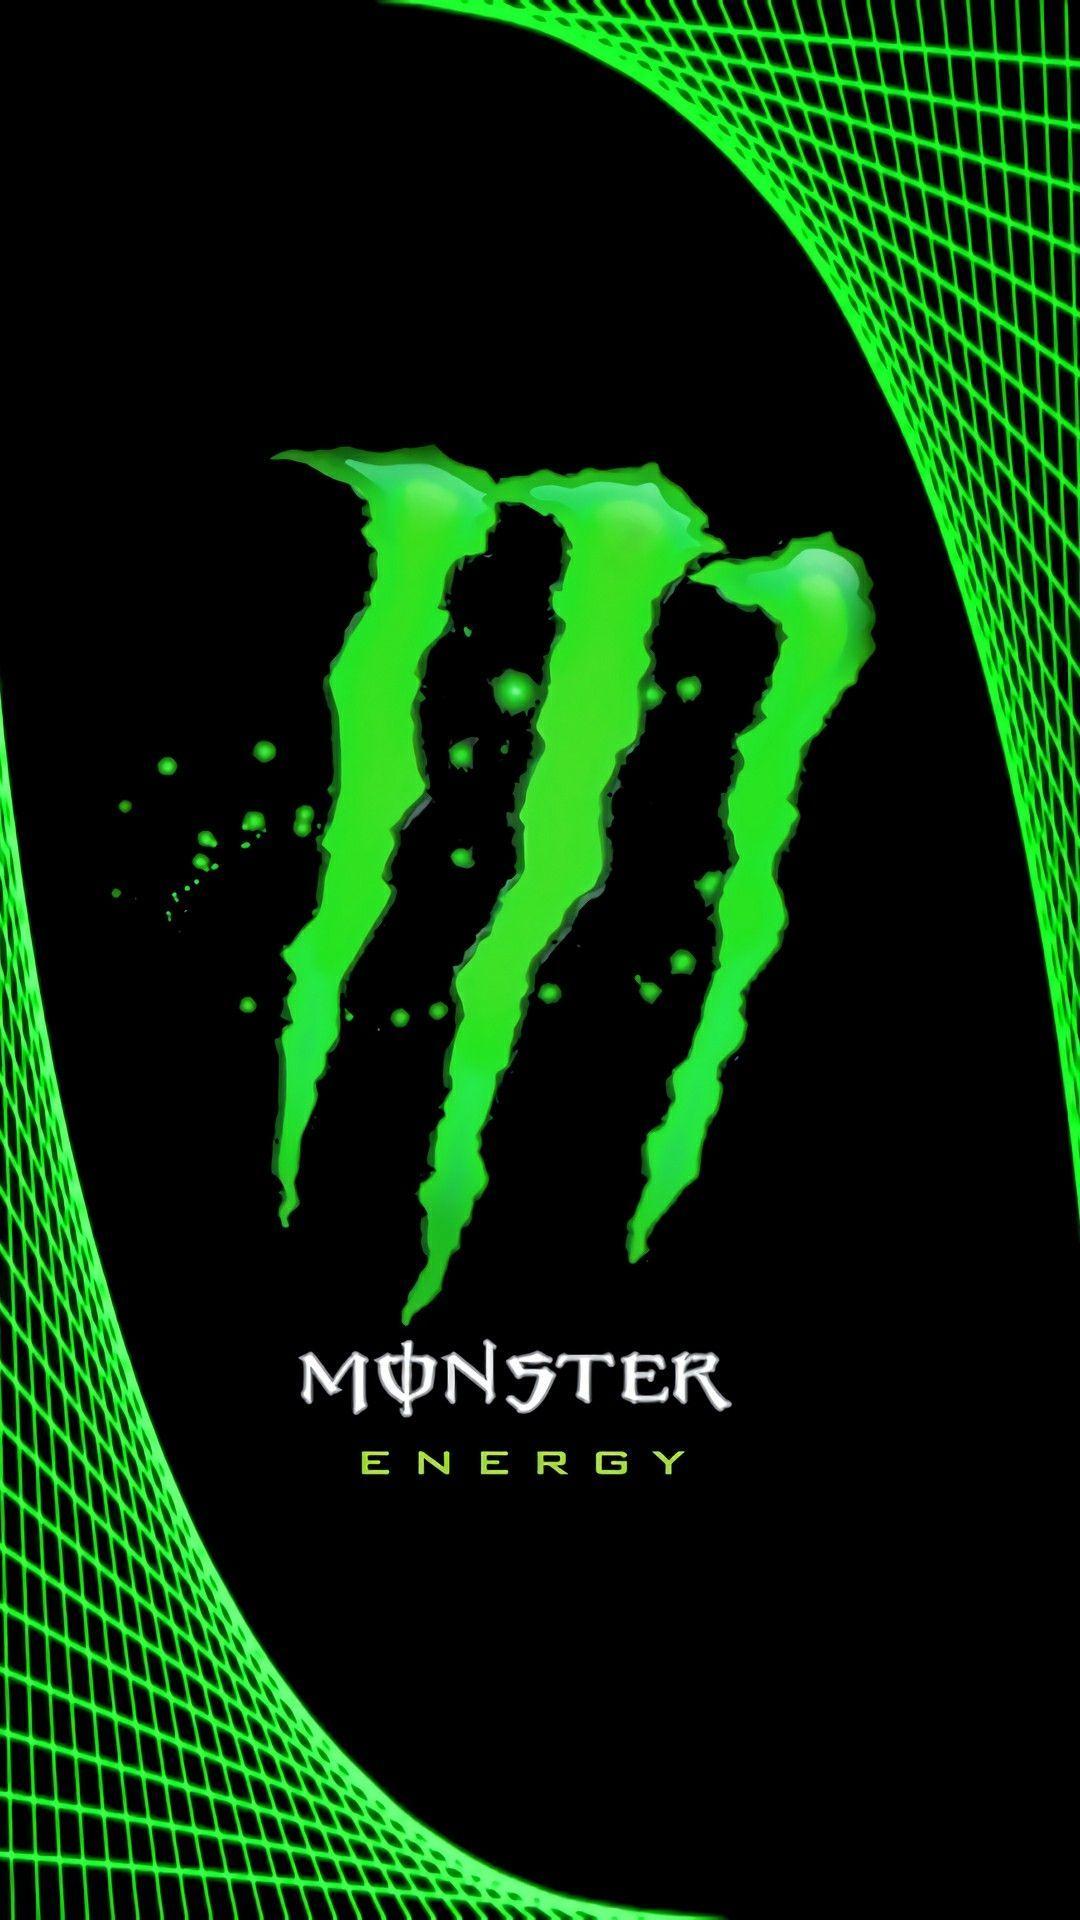 Cool Fox and Monster Logo - Pin by Jamie Jones on Monster Energy/Fox Racing in 2019 | Monster ...